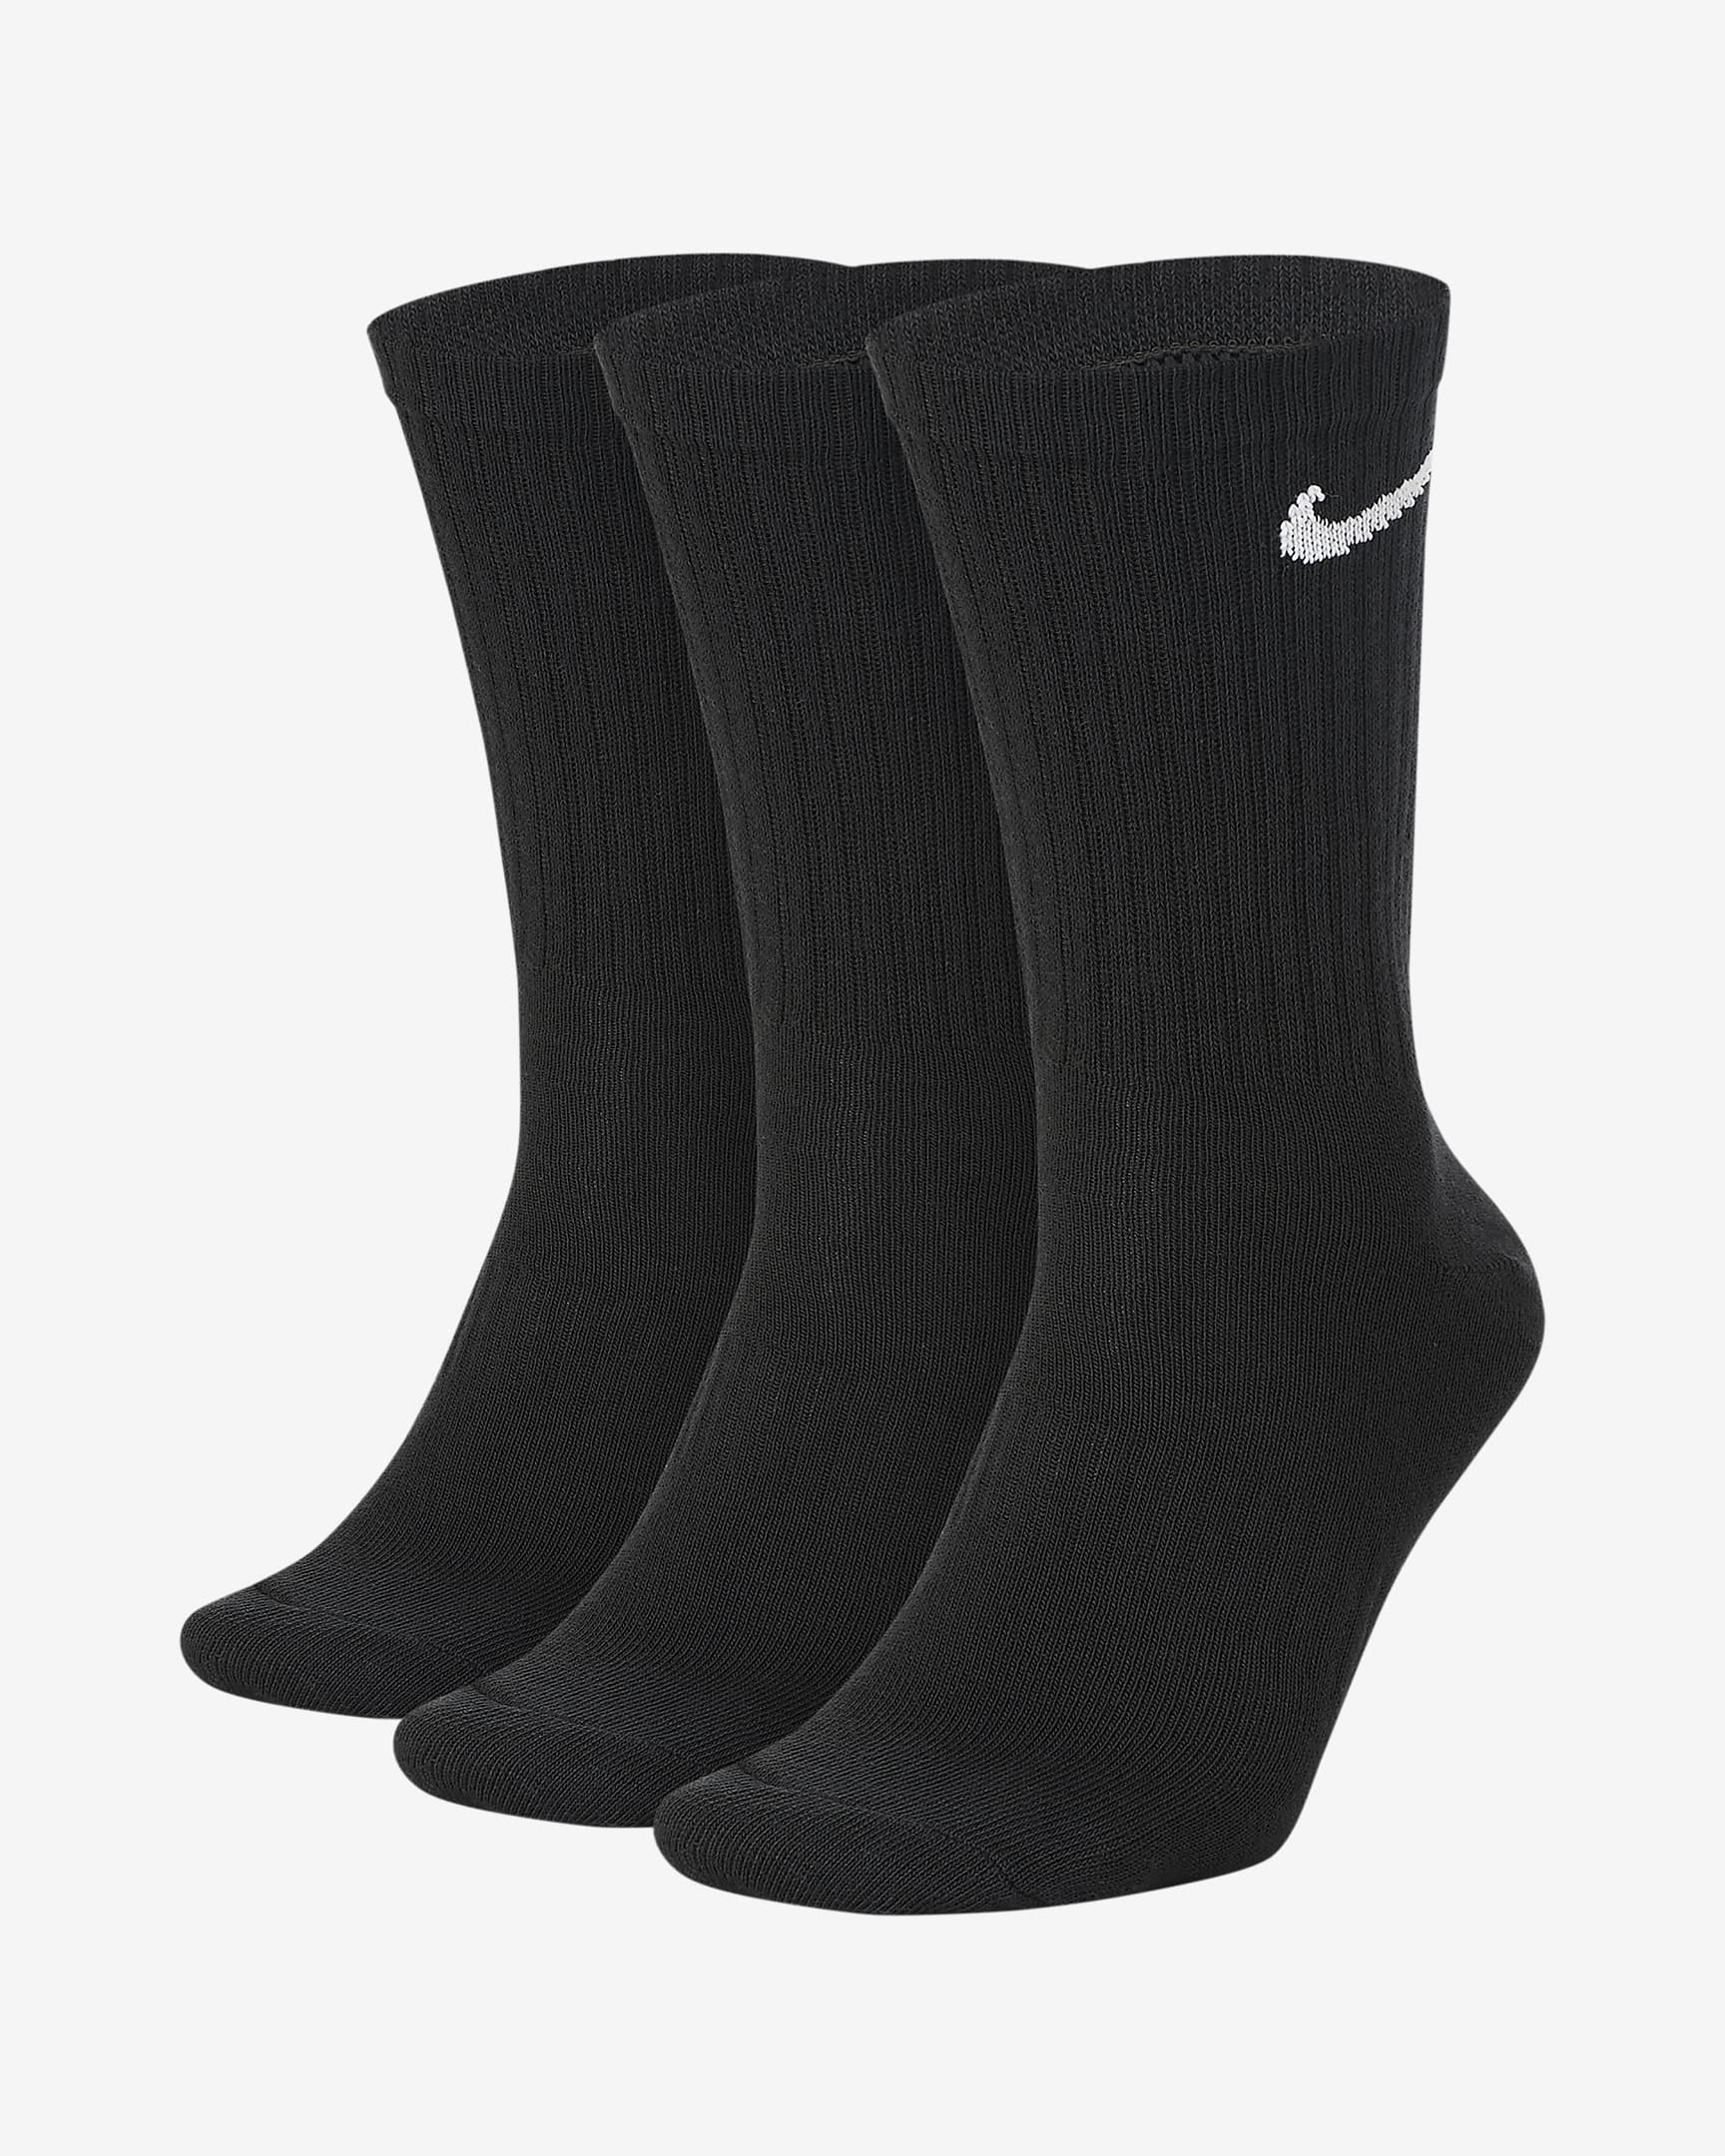 Nike Performance Cushion Crew Training Socks